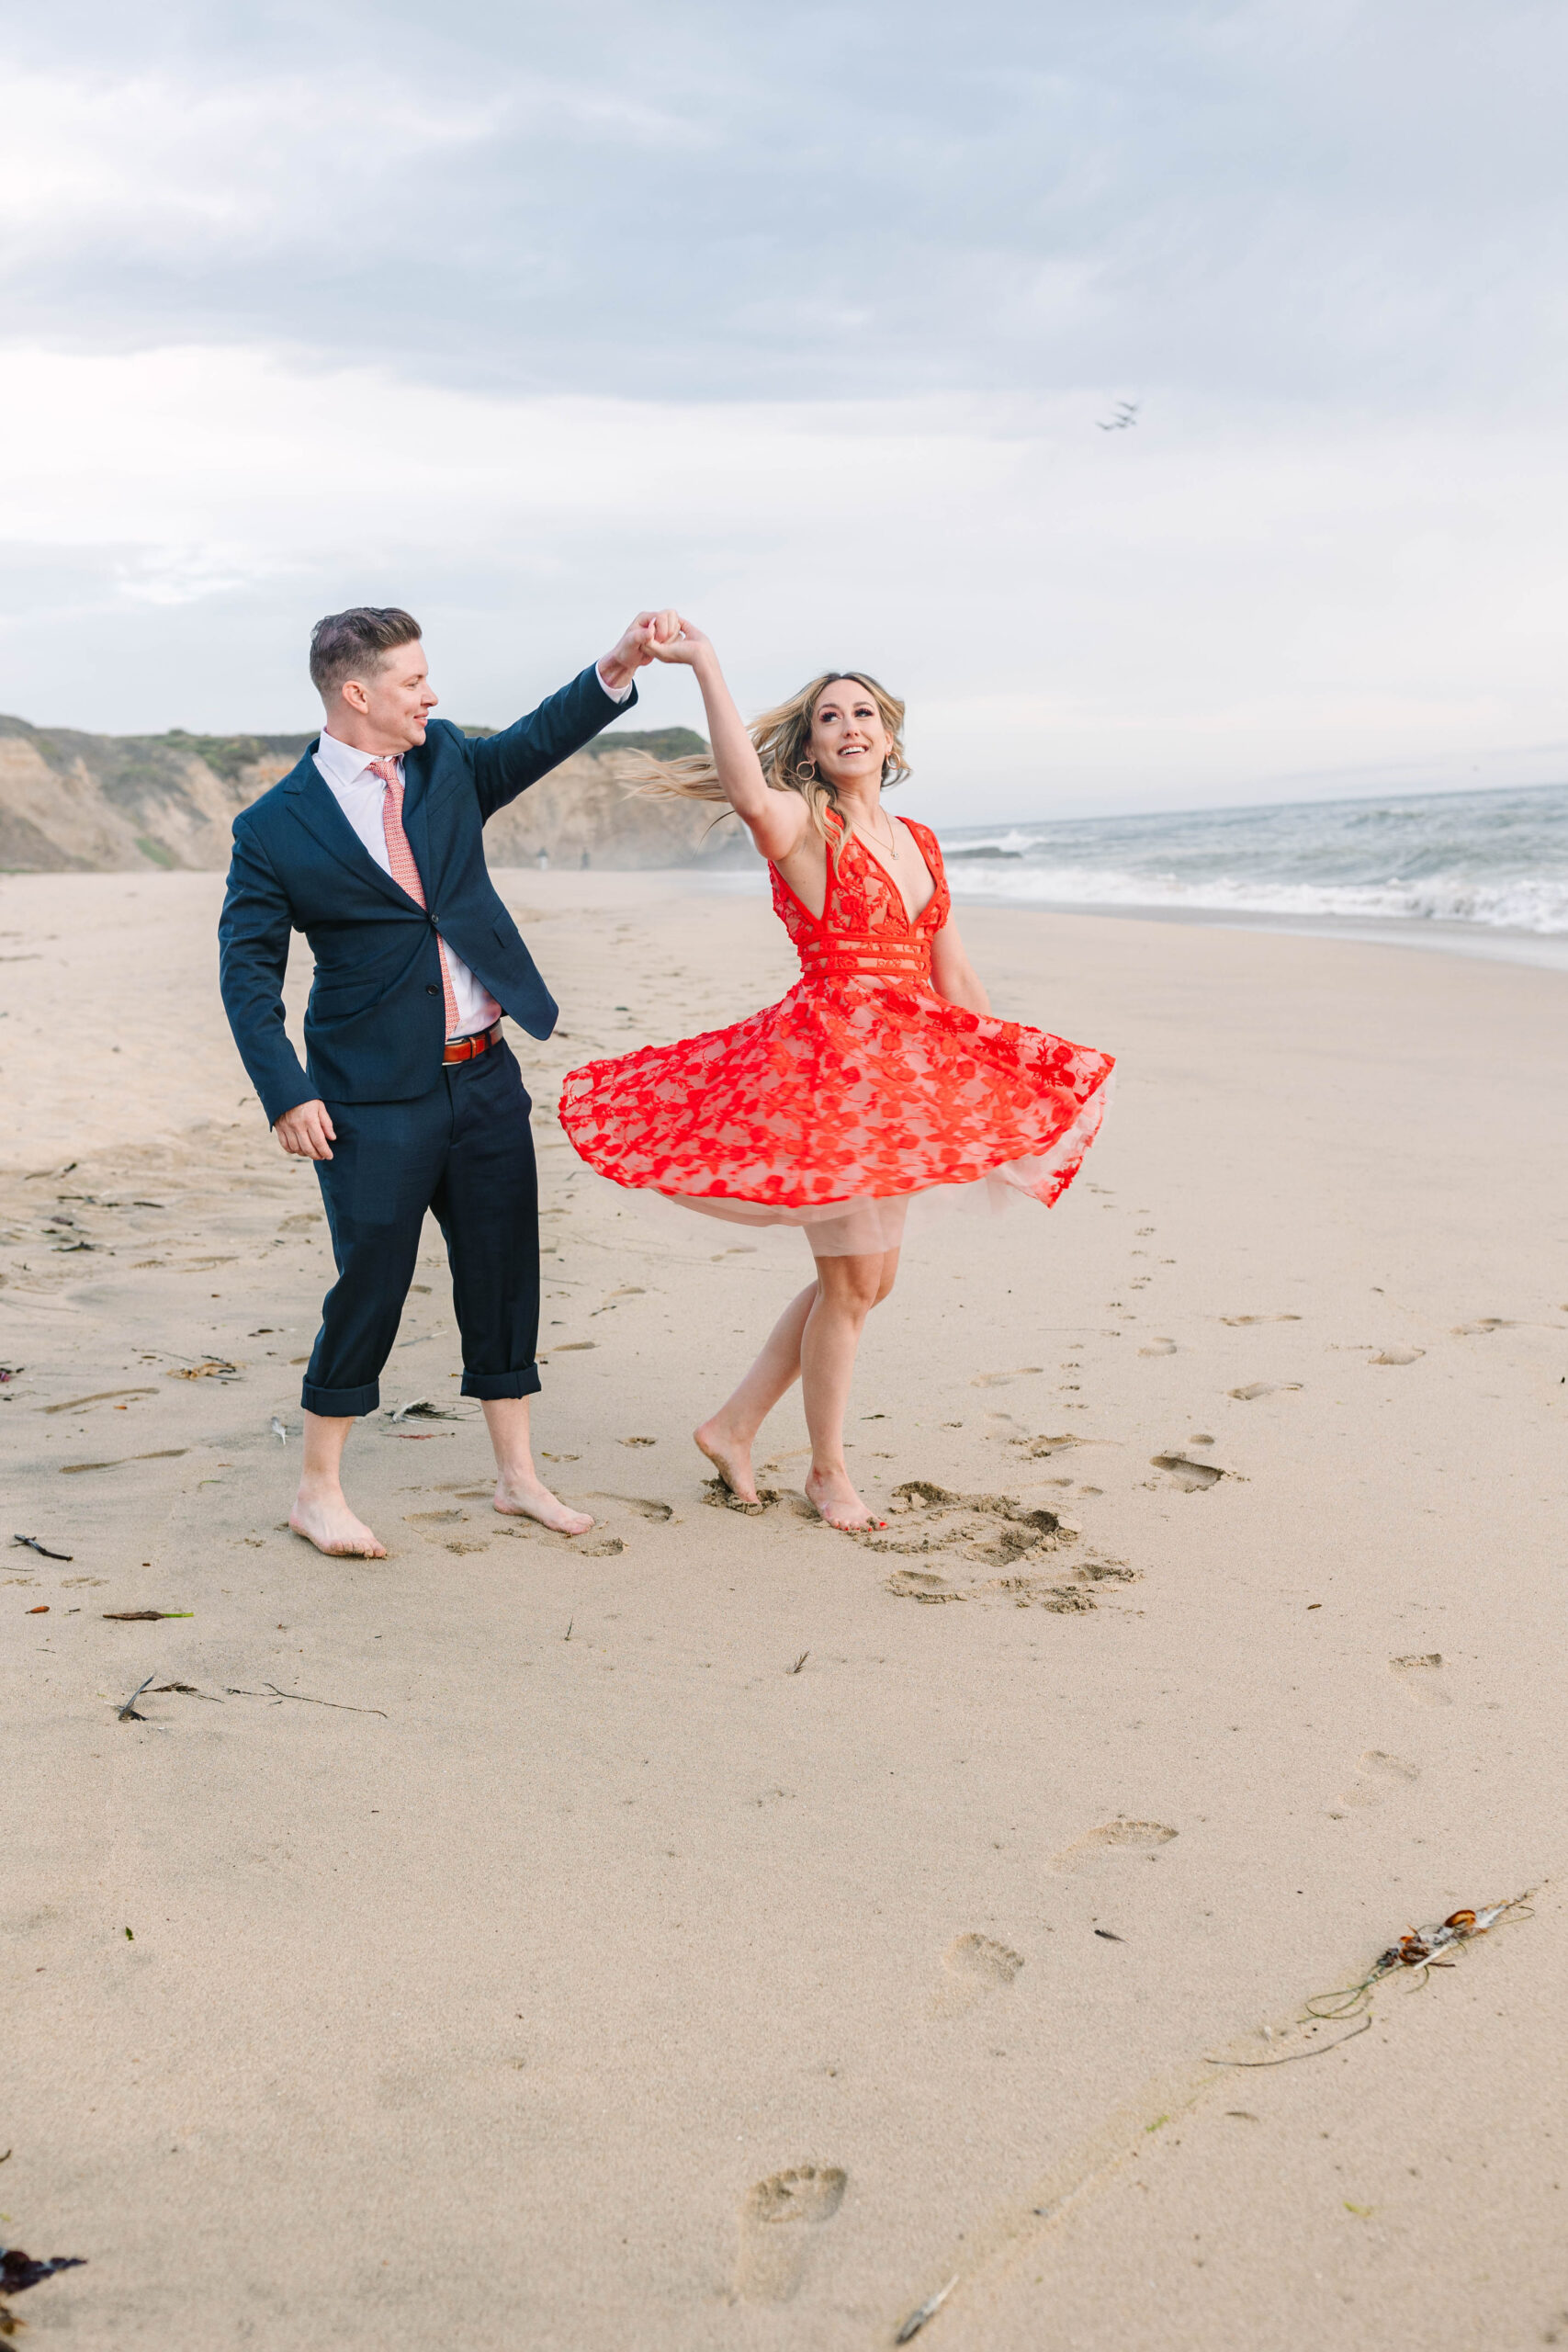 Bay Area wedding photographers capture man spinning woman on beach